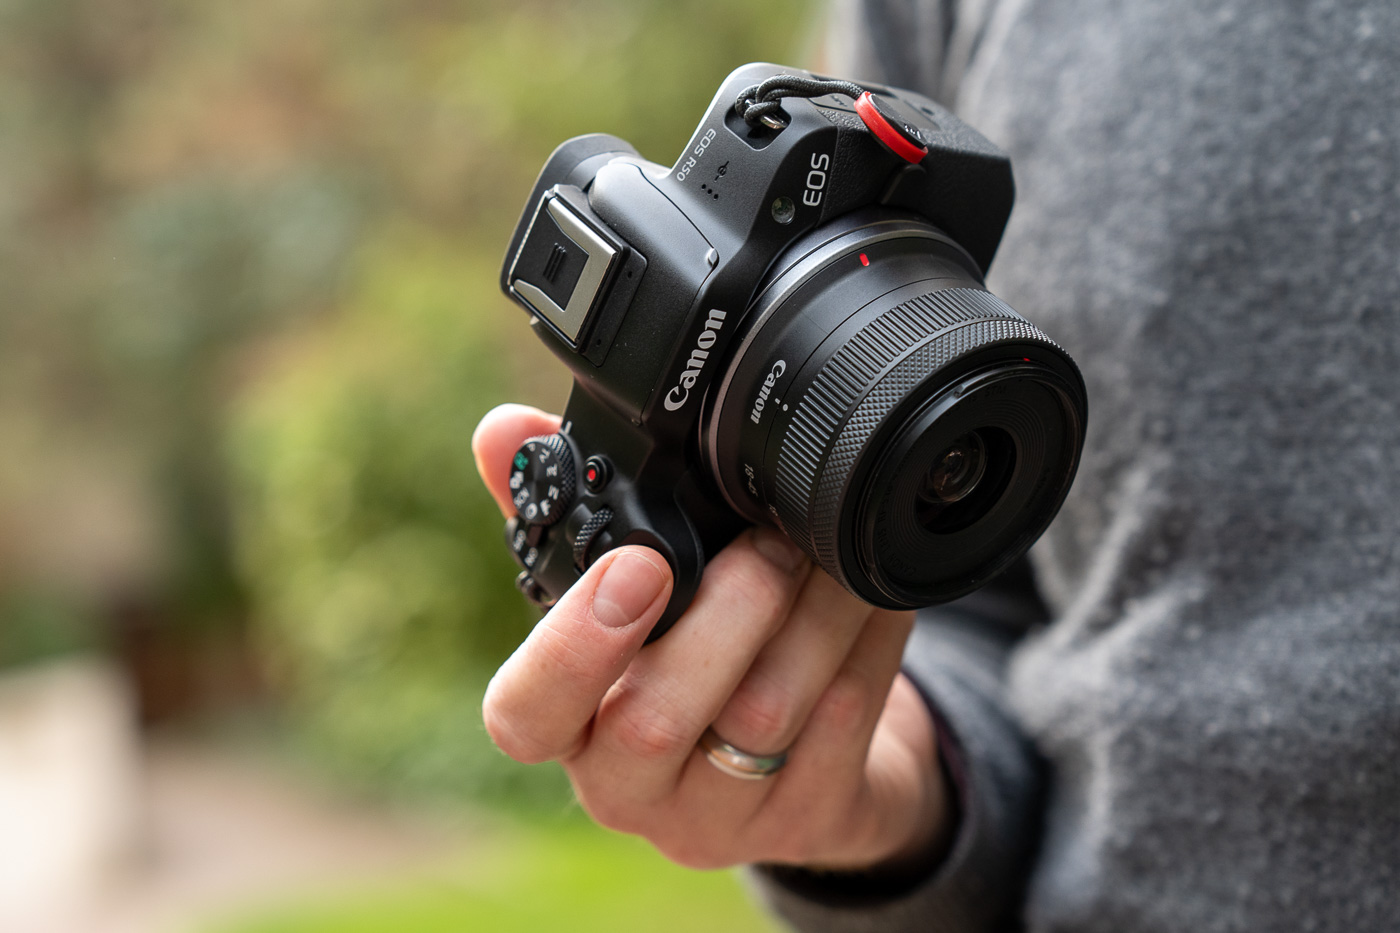 Test Canon EOS R50 Phototrend